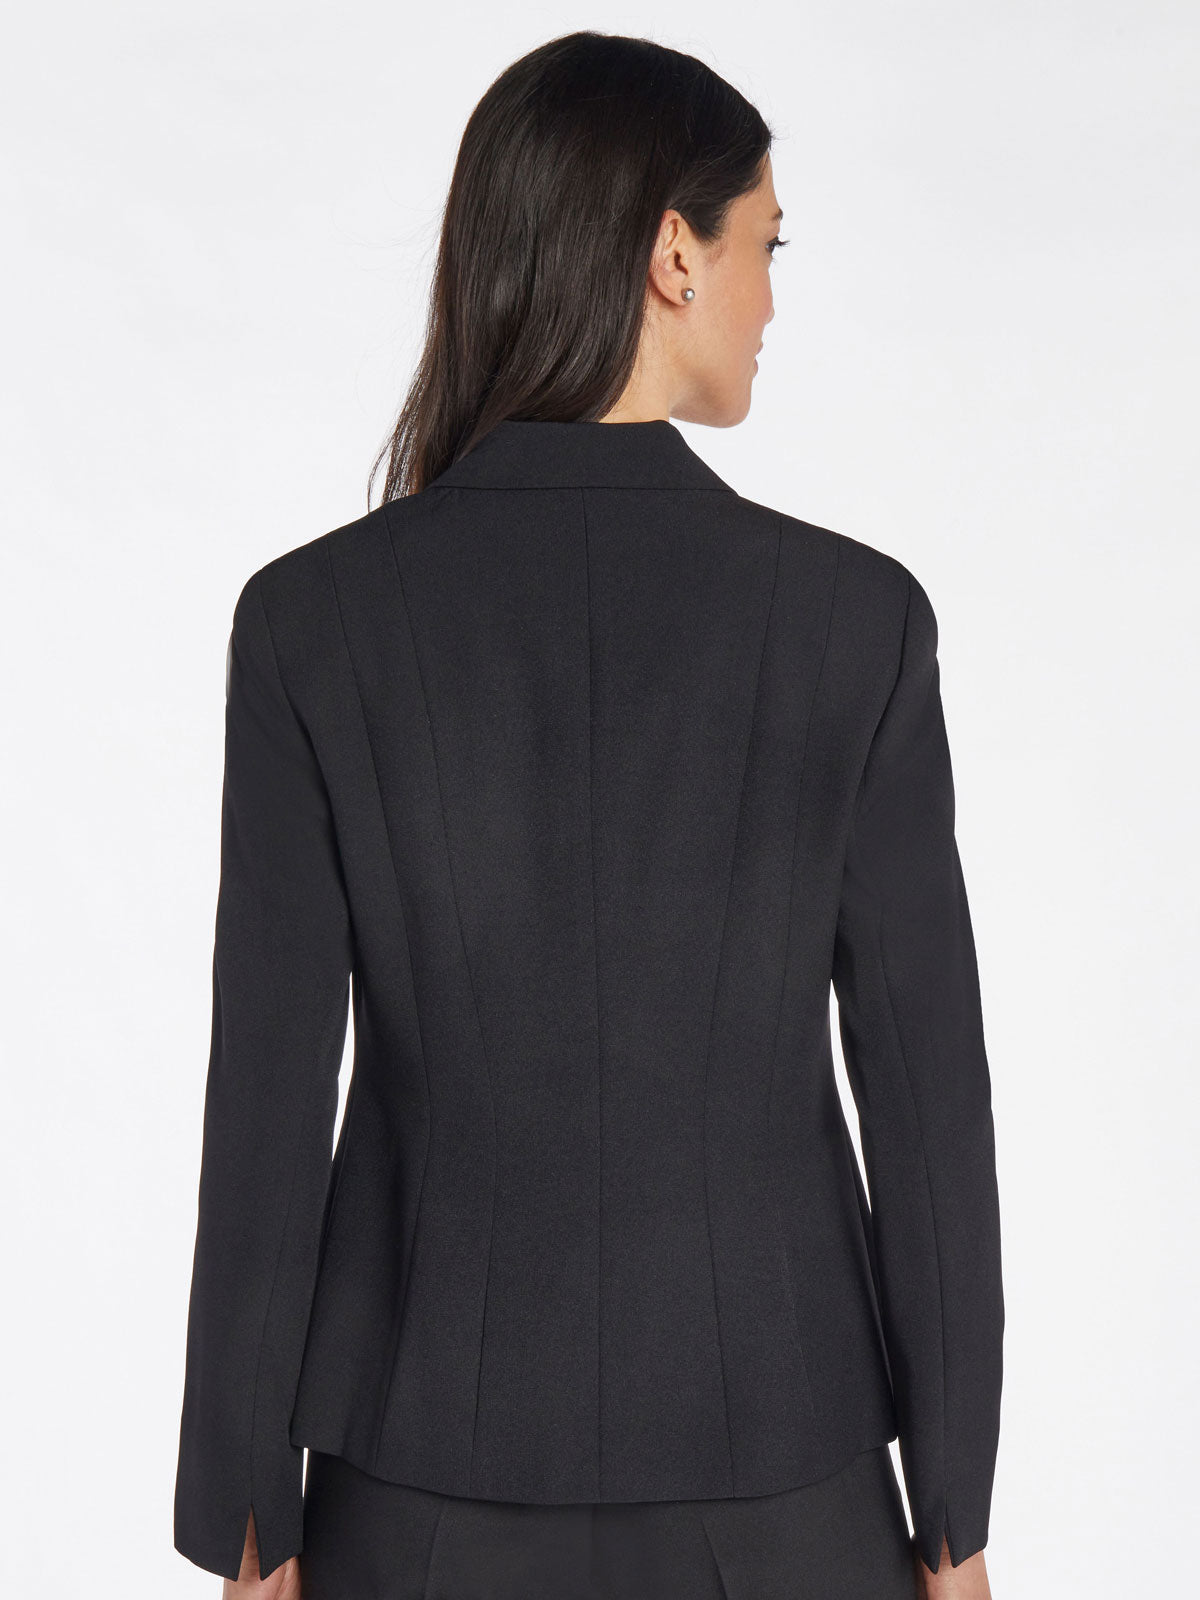 Clothing : Jackets : 'Gabri' Black Crepe Tailored Blazer